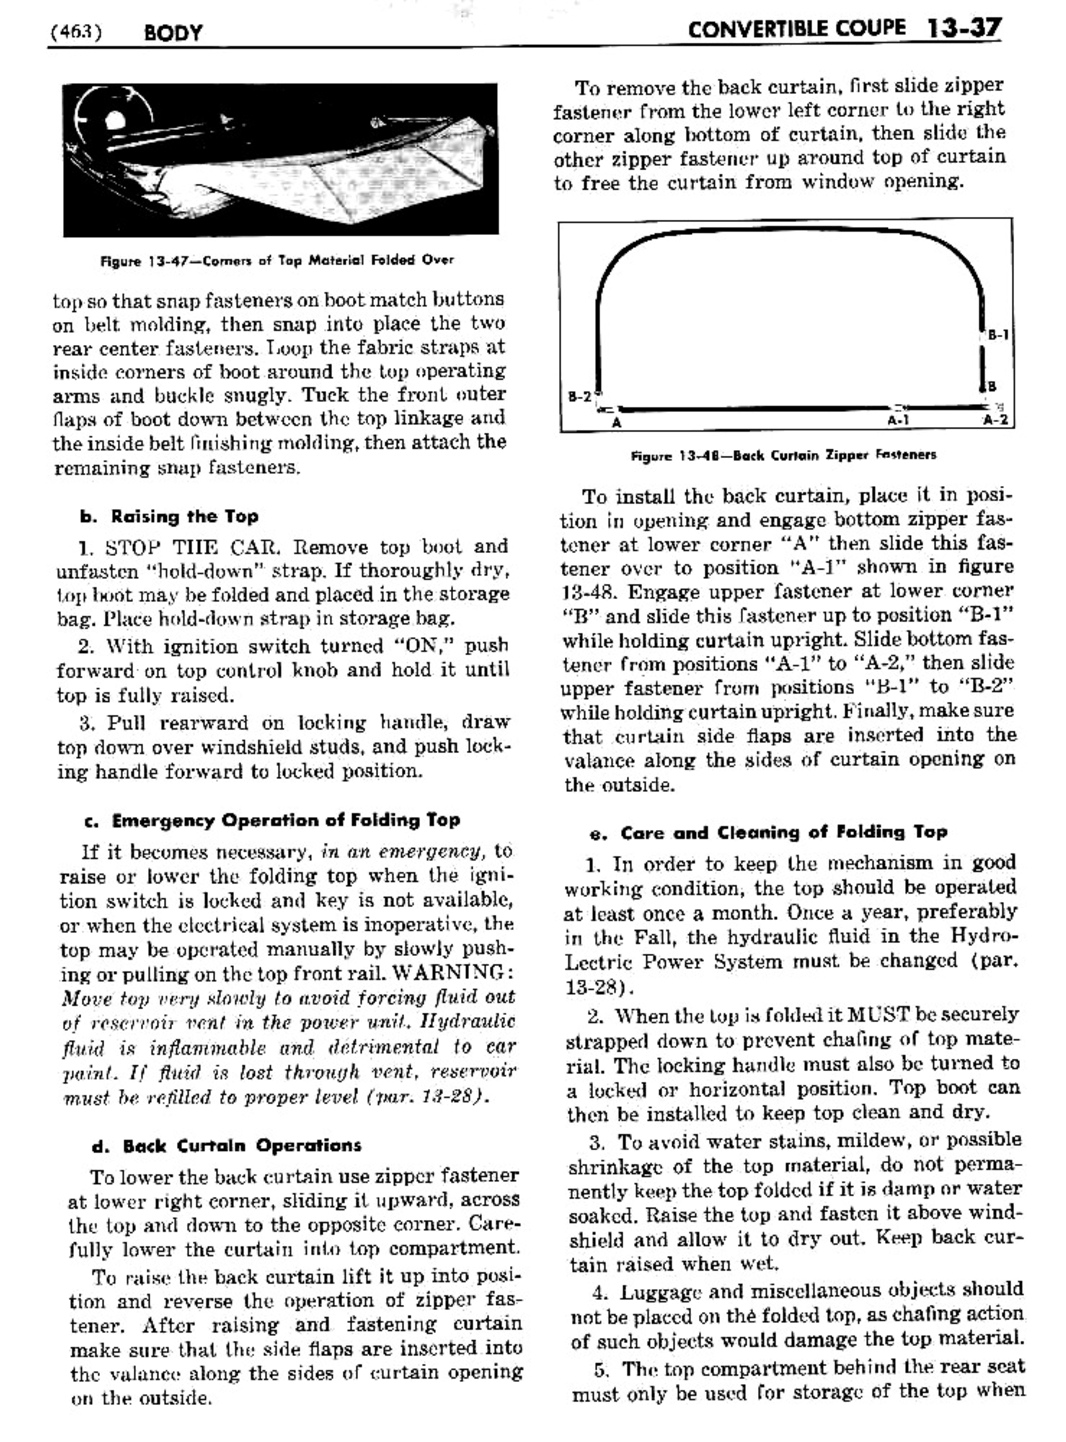 n_14 1951 Buick Shop Manual - Body-037-037.jpg